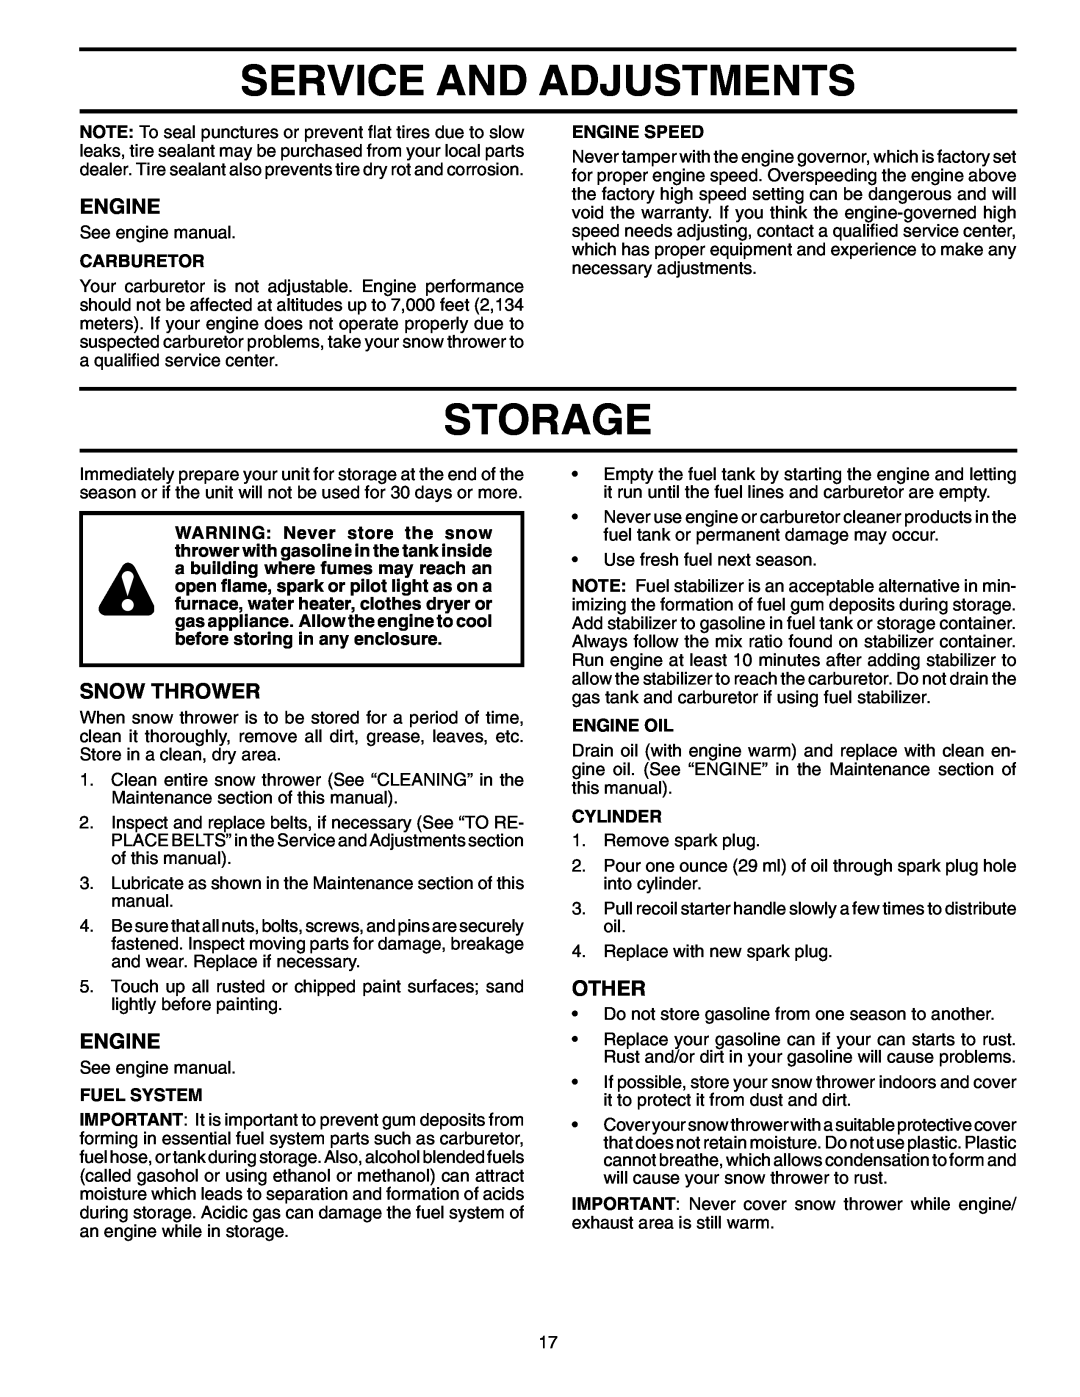 Poulan 199434 Storage, Other, Service And Adjustments, Snow Thrower, Carburetor, Engine Speed, Fuel System, Engine Oil 